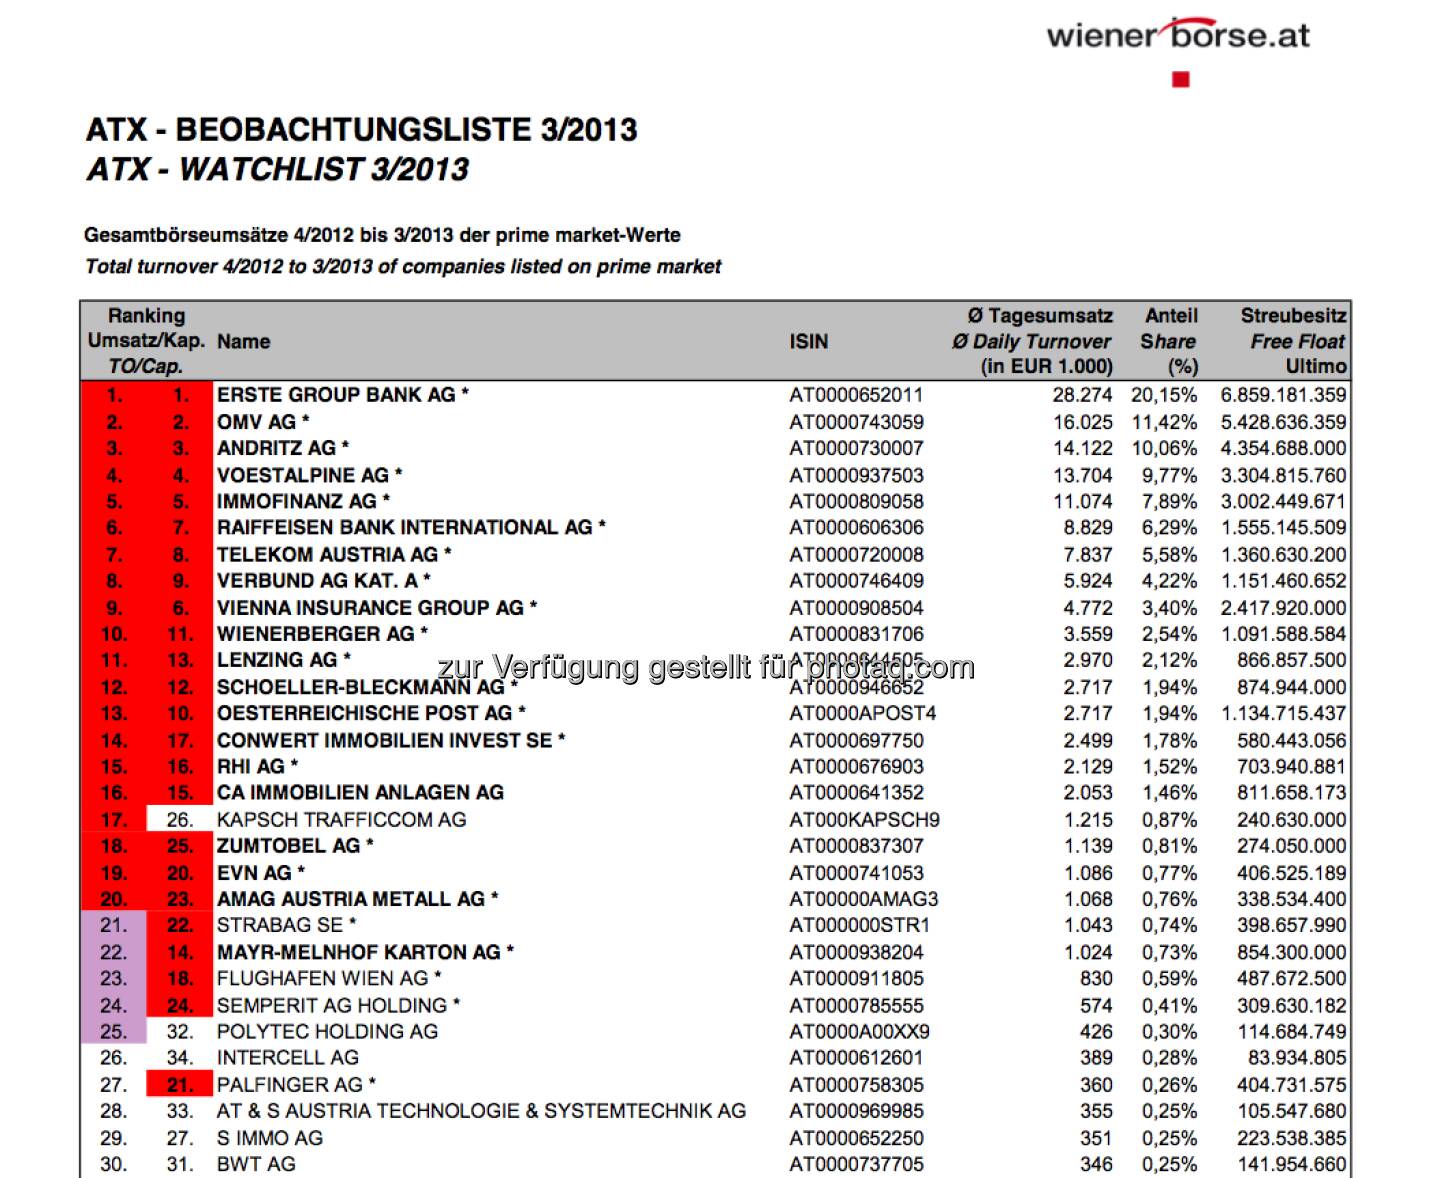 ATX-Beobachtungliste 3/2013 (c) Wiener Börse